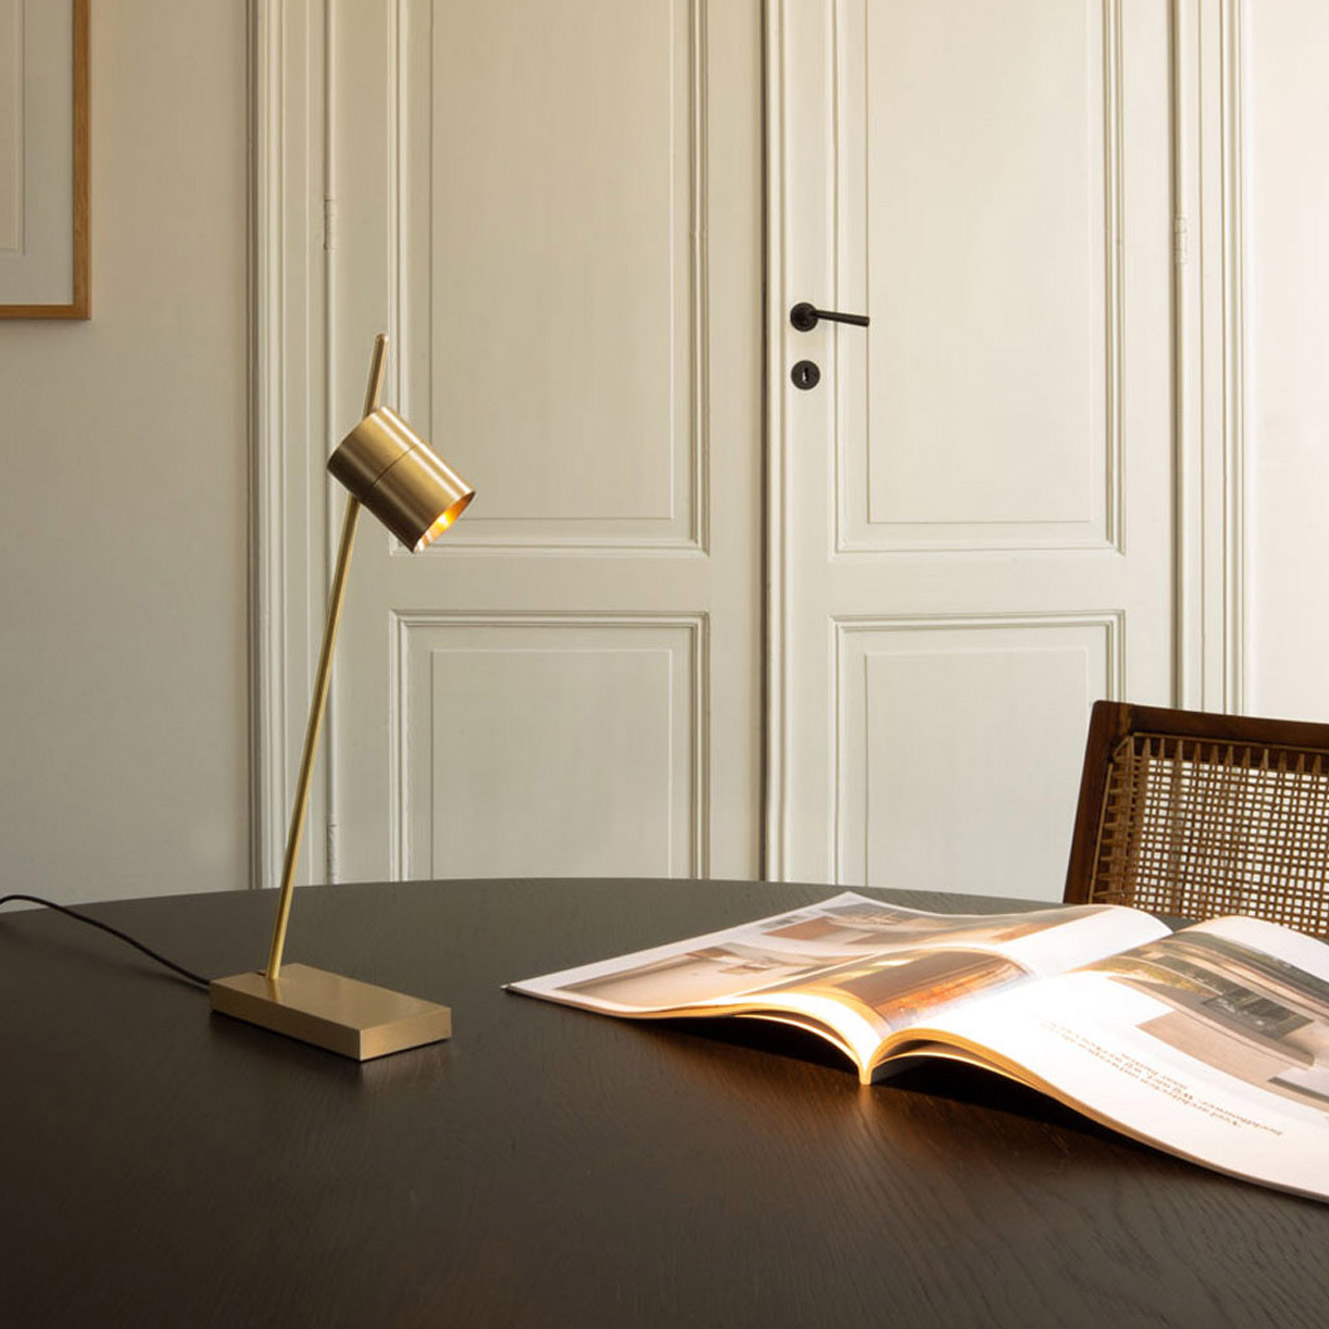 Aude table lamp by Bruno van Meenen for Trizo21 in brass